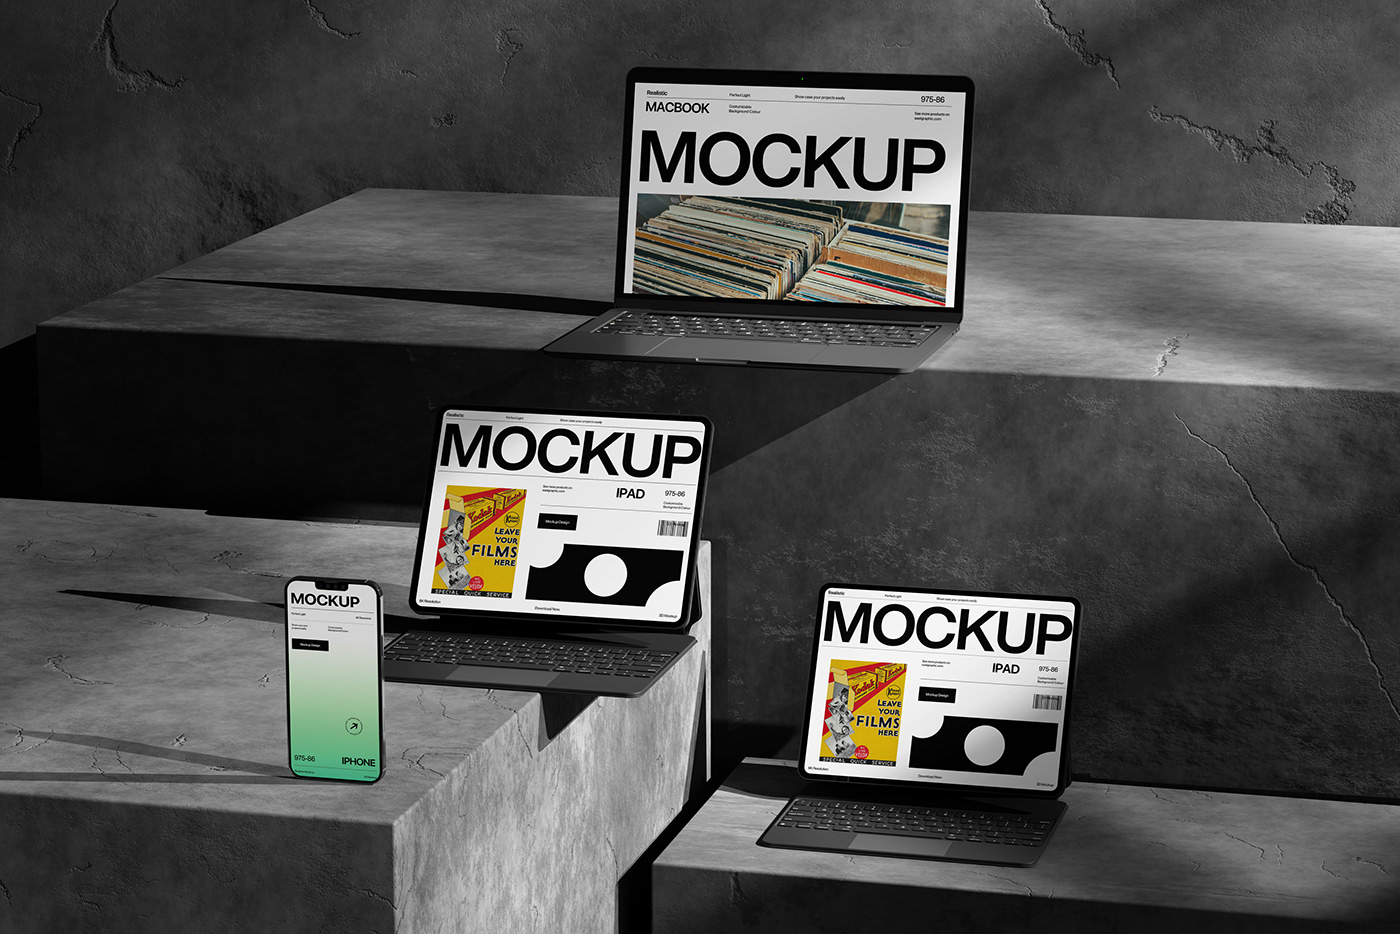 download font free free download iMac iPad iphone macbook Mockup psd